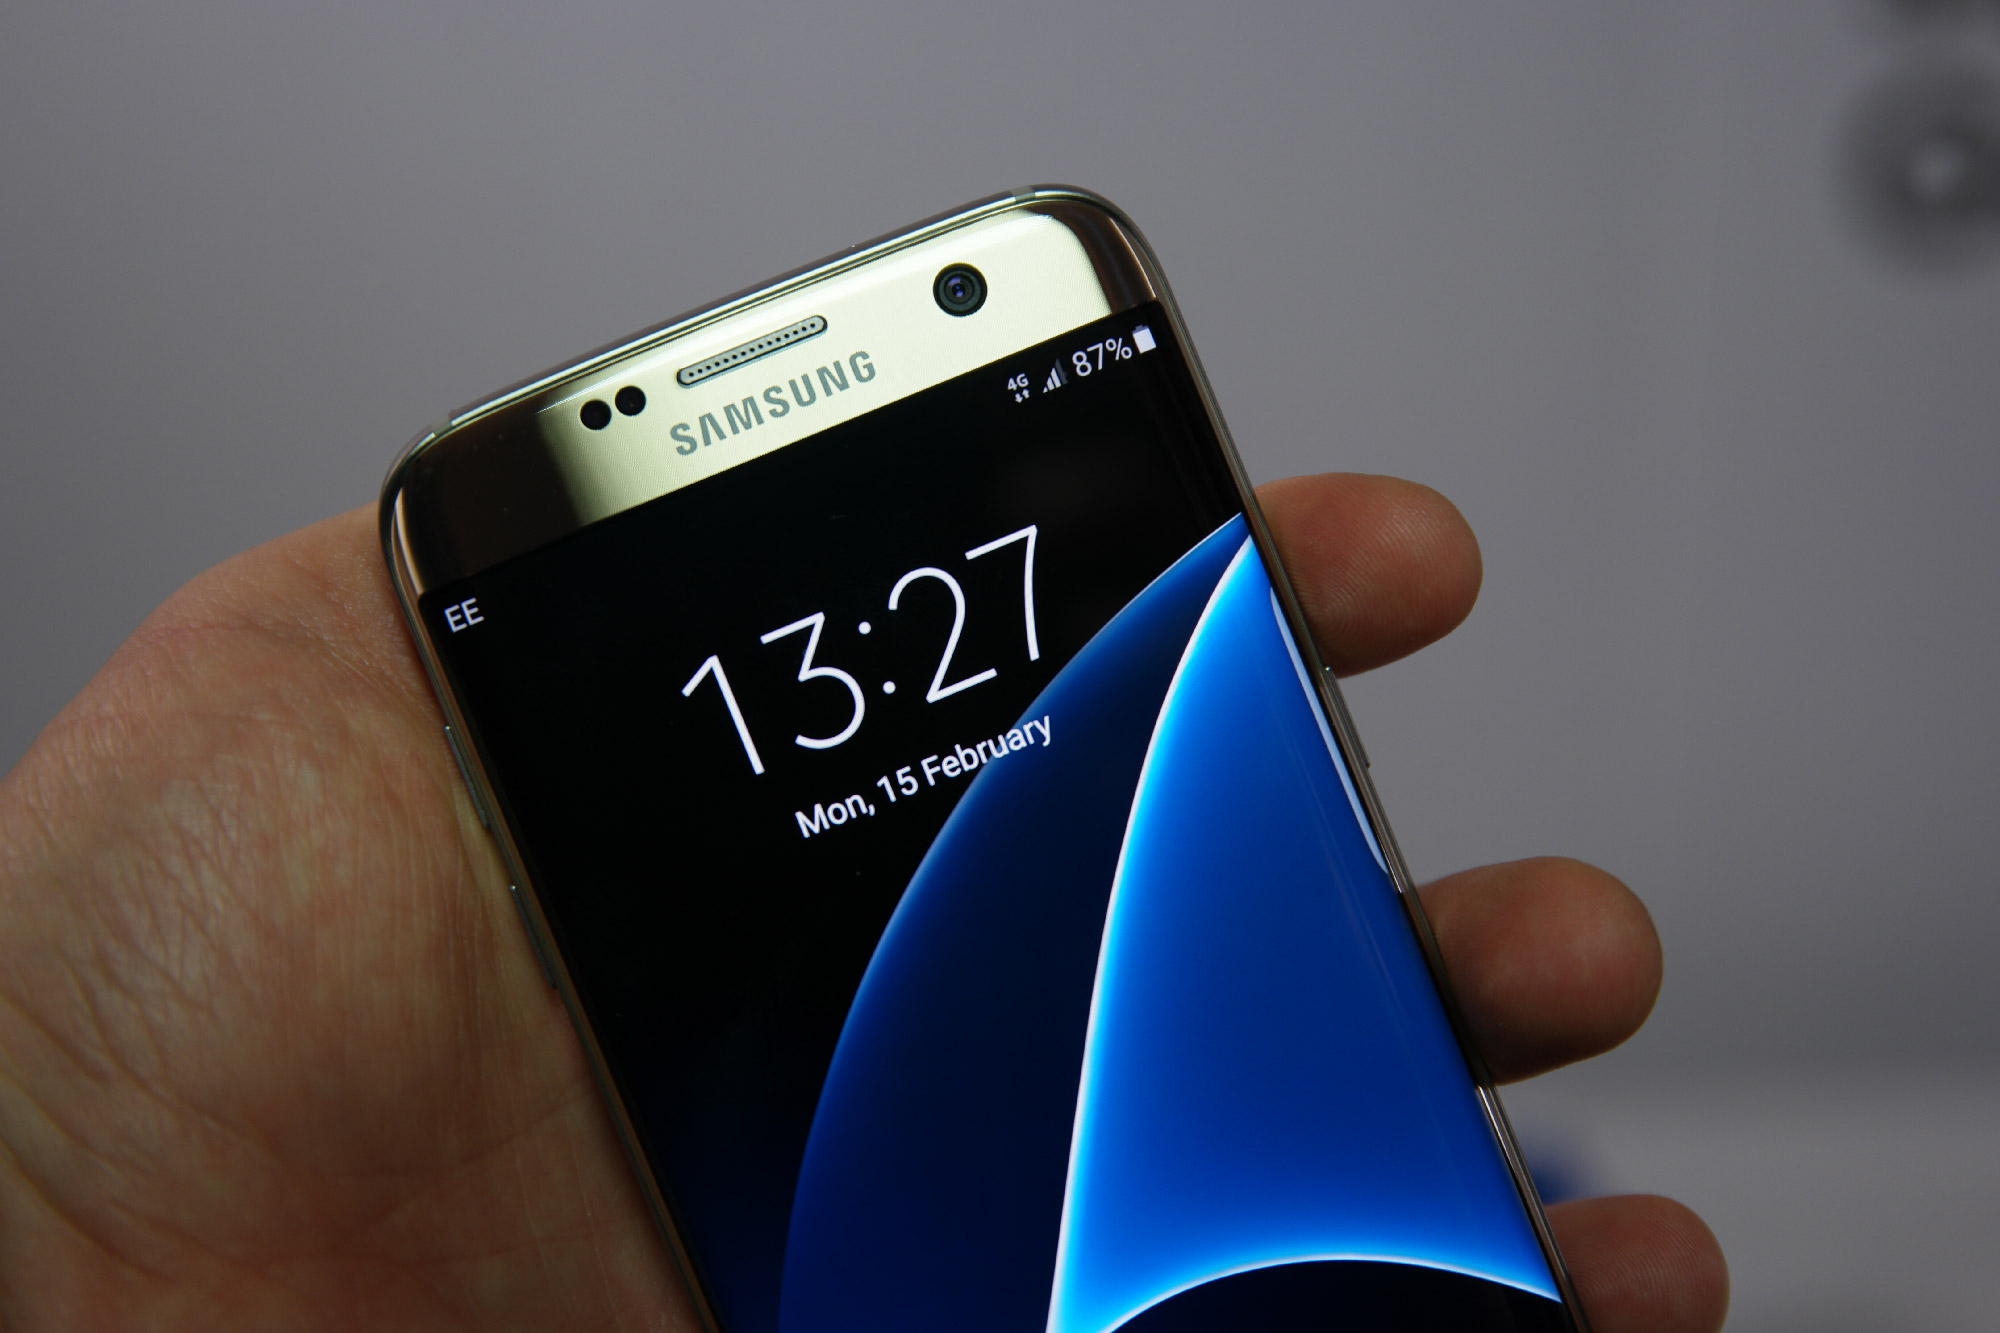 Samsung Galaxy s7,s7 Edge